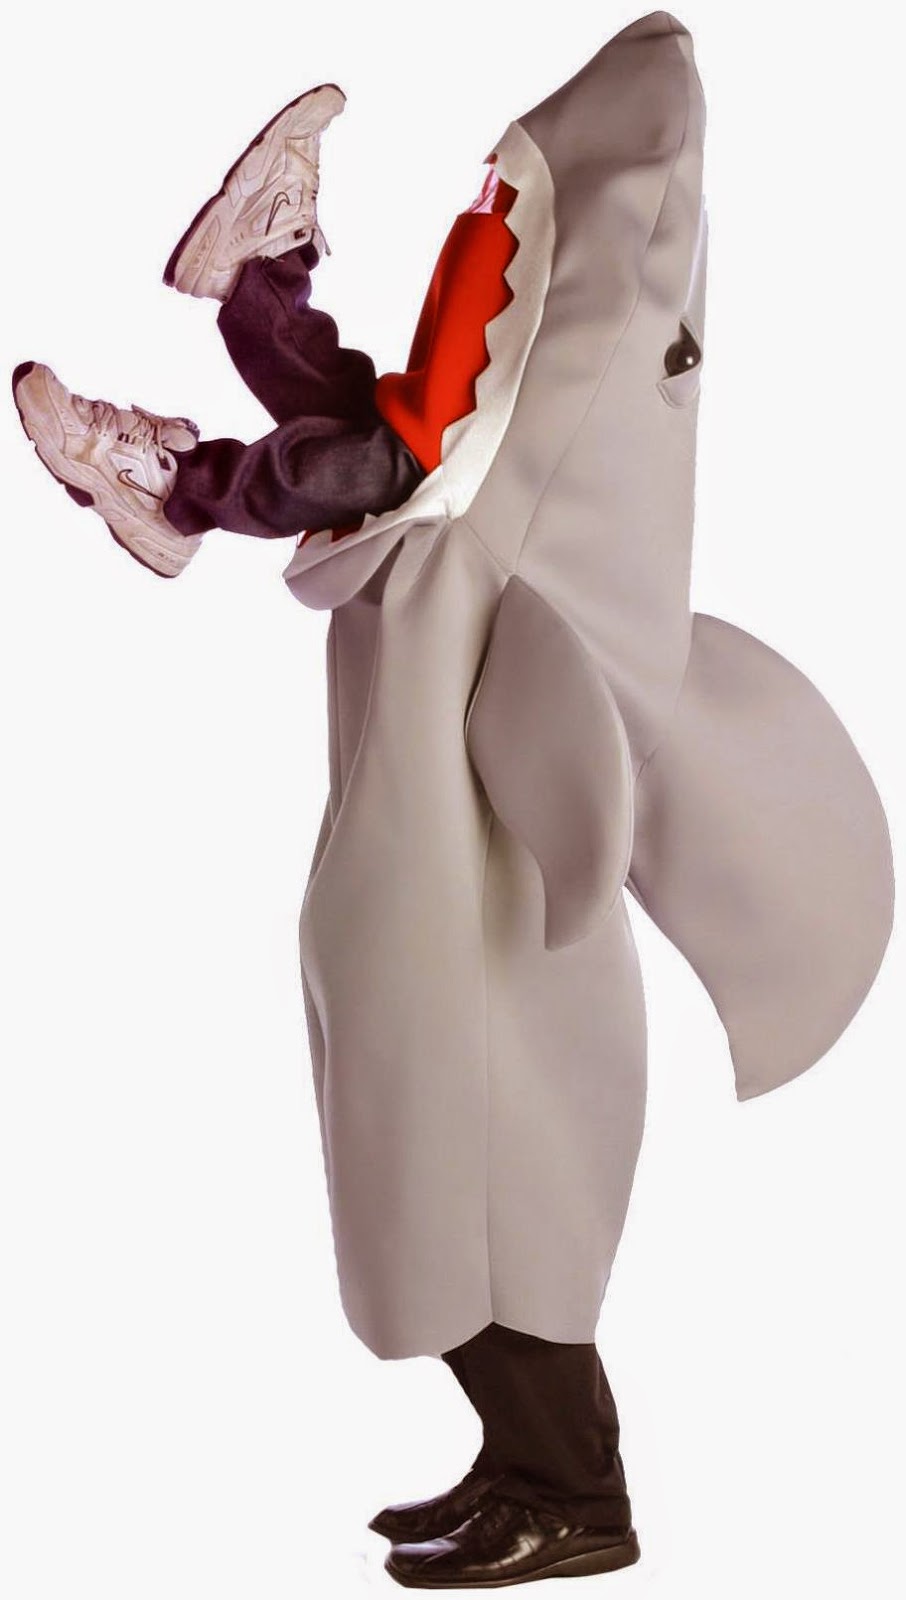 http://www.partybell.com/p-291-man-eating-shark-adult-costume.aspx?utm_source=Blog&utm_medium=Social&utm_campaign=International-joke-day-costume-ideas